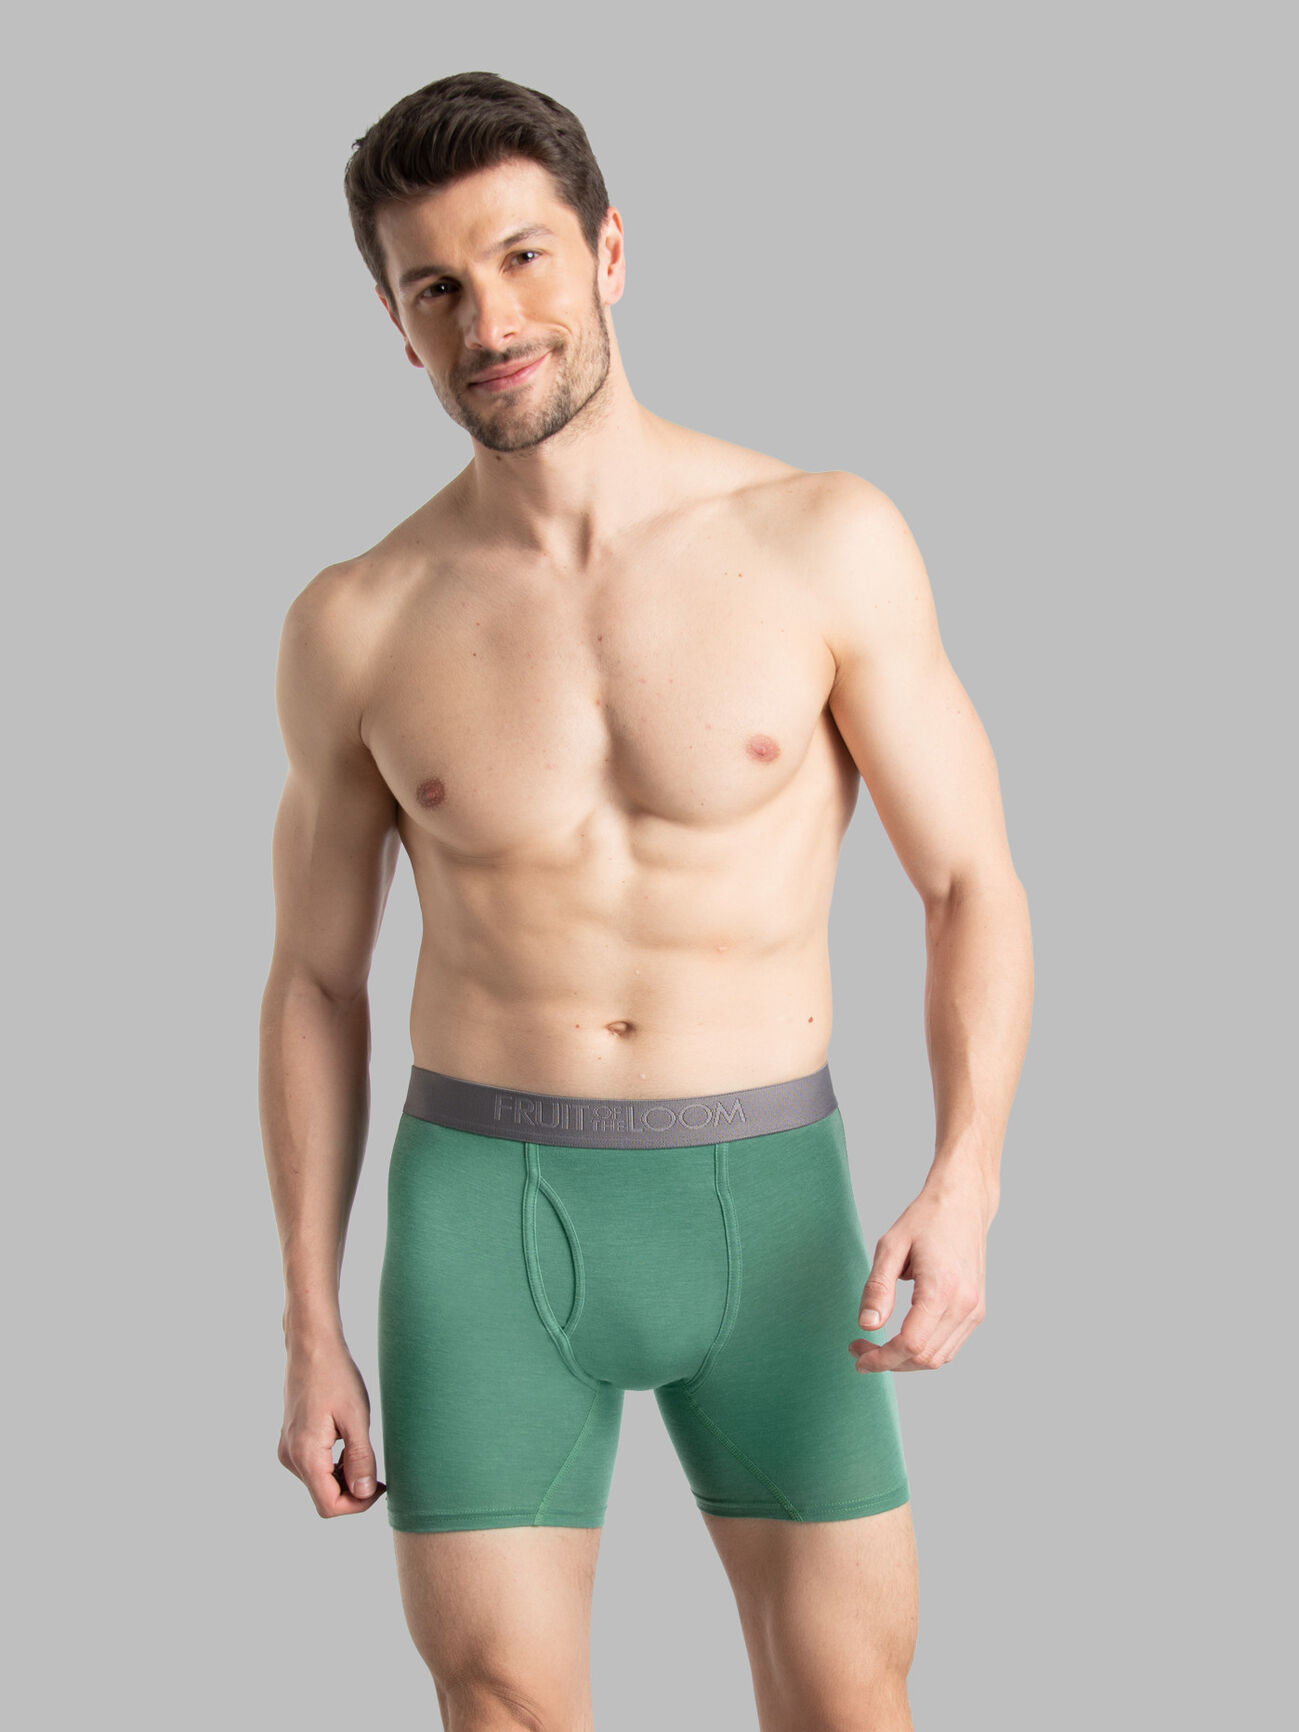 Performance Boxer Briefs for Men Best Men's Underwear For Sweating  Transparent Boxer Shorts Feminine Underwear Men